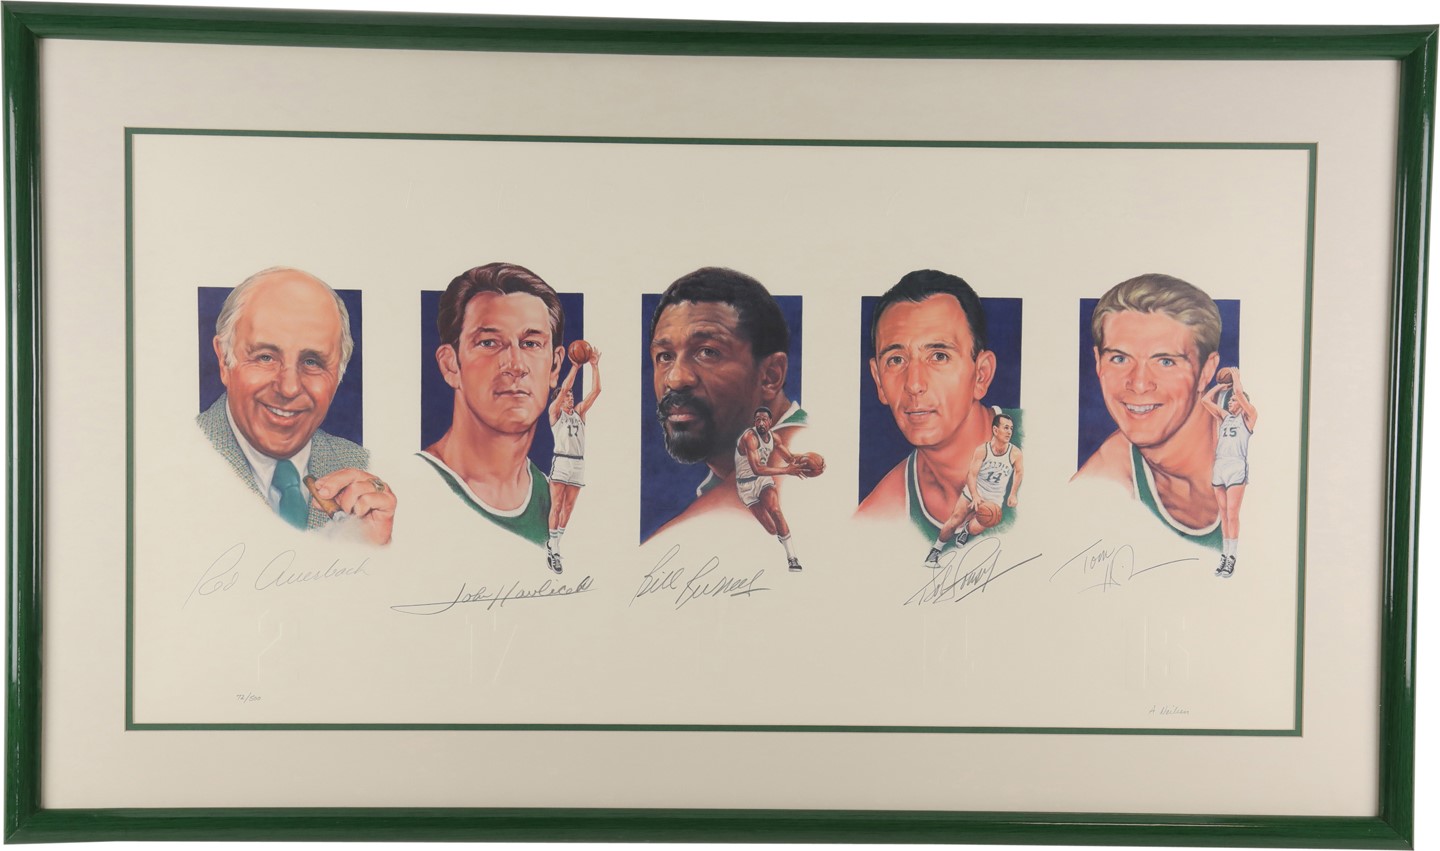 - Boston Celtics Legends Signed Limited Edition Lithograph 72/500 (COA)